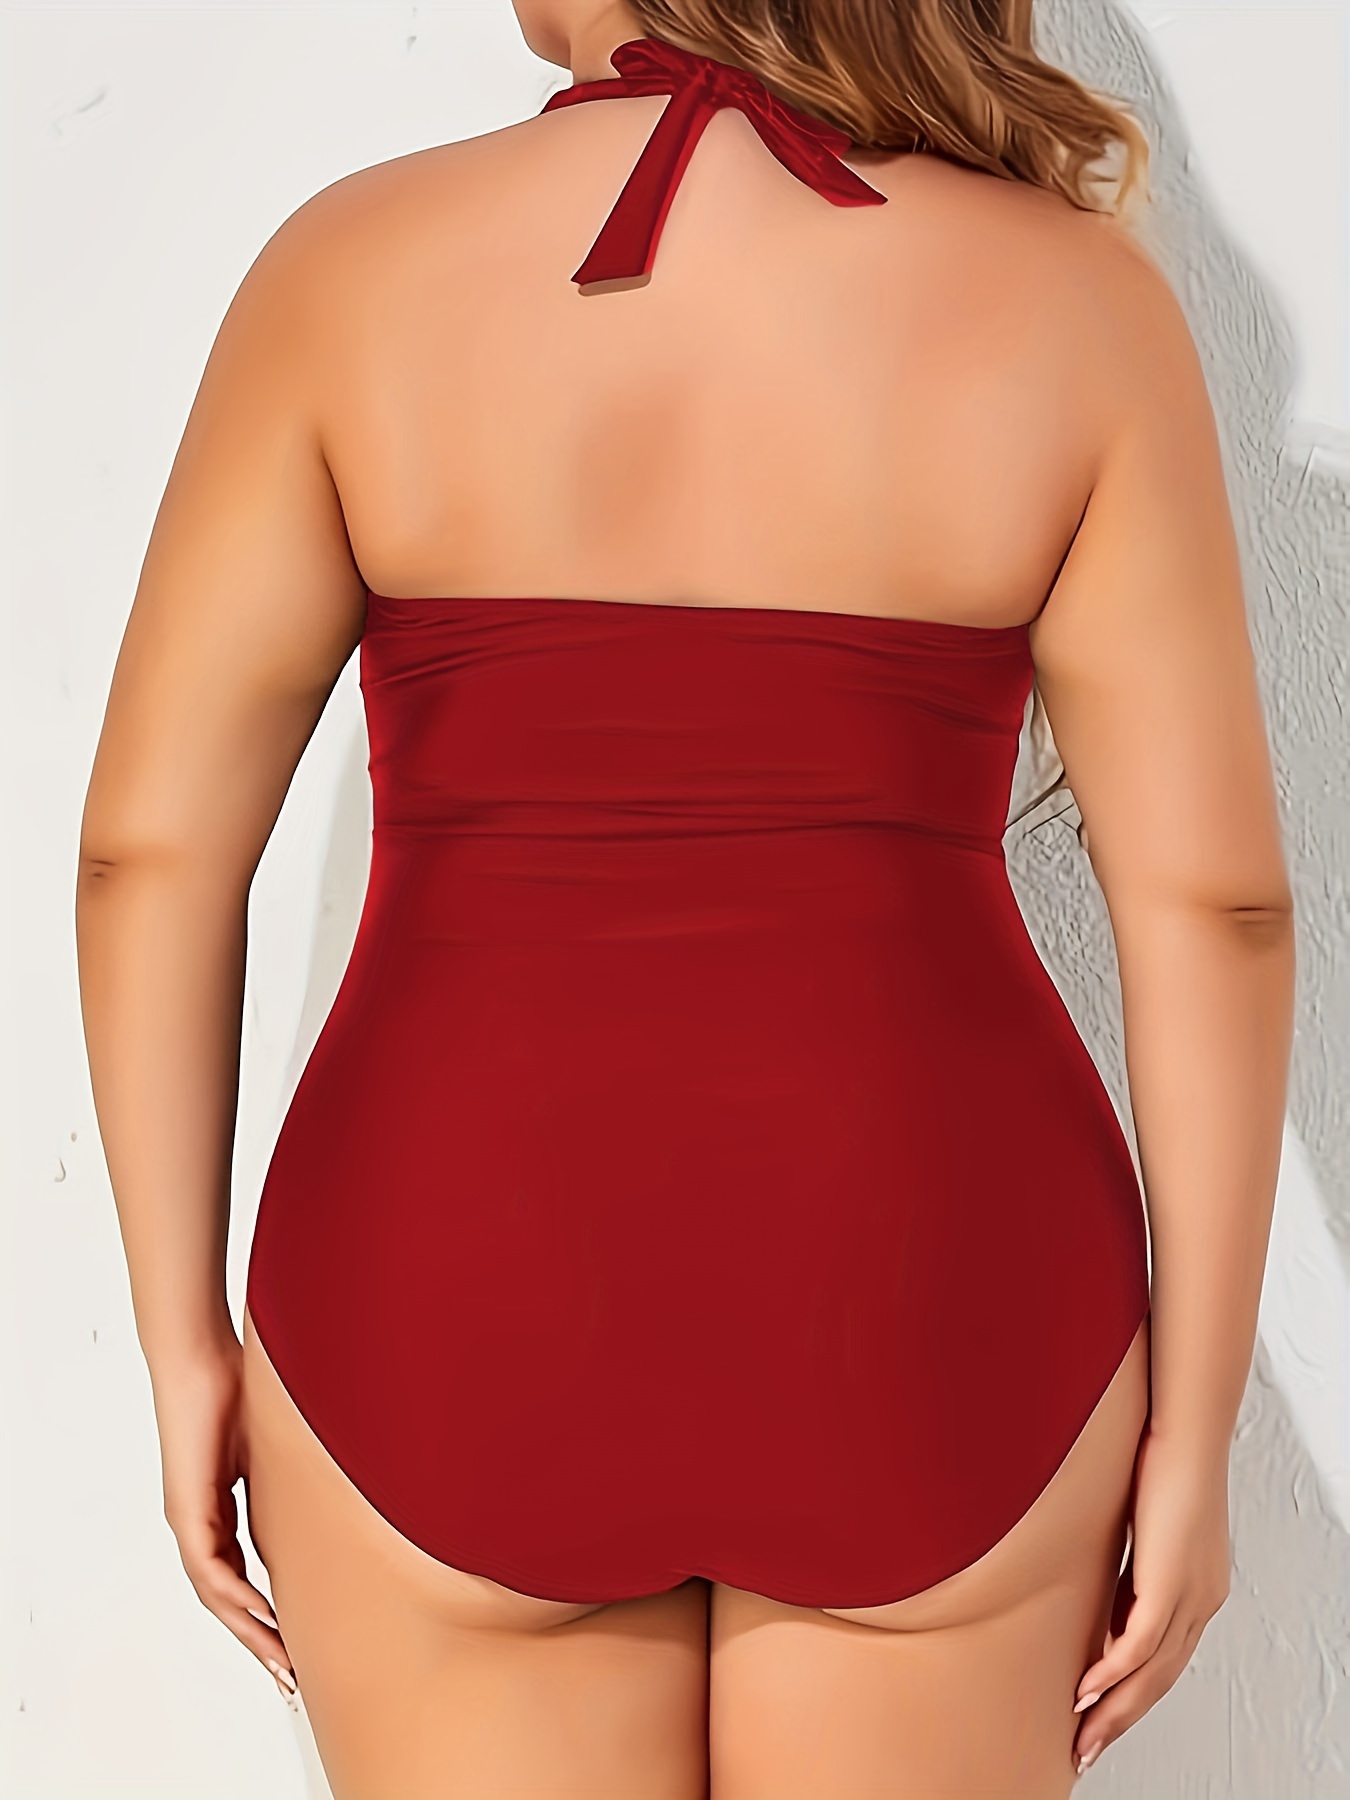 Plus Size One Piece Bathing Suit for Women Tummy Control Swimwear